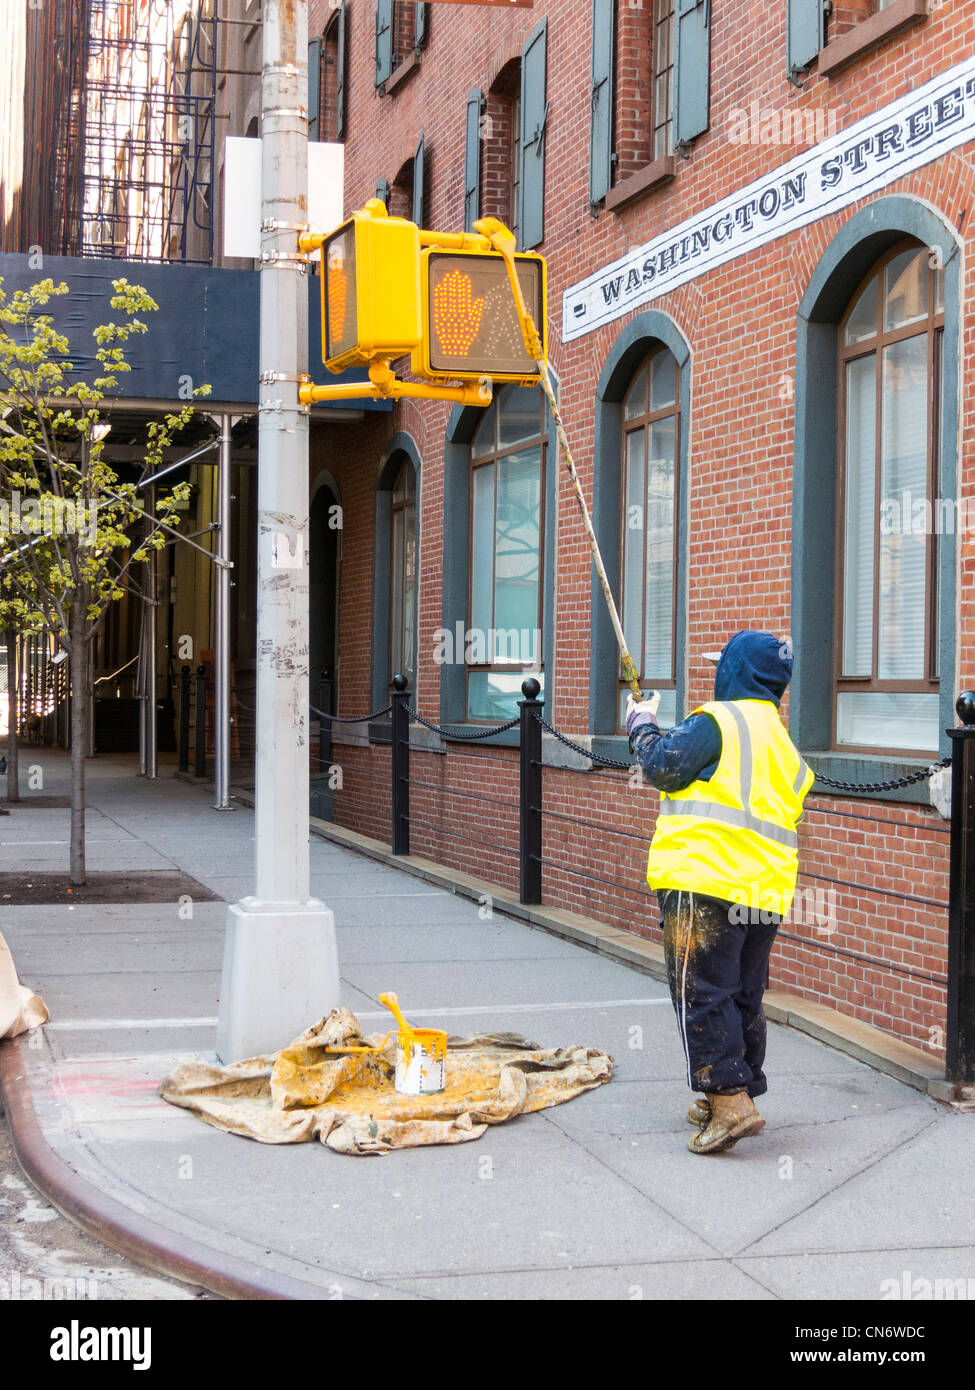 Frau Arbeiter Malerei Stoppschild, Washington Street, Manhattan, New York, NY, Vereinigte Staaten Stockfoto